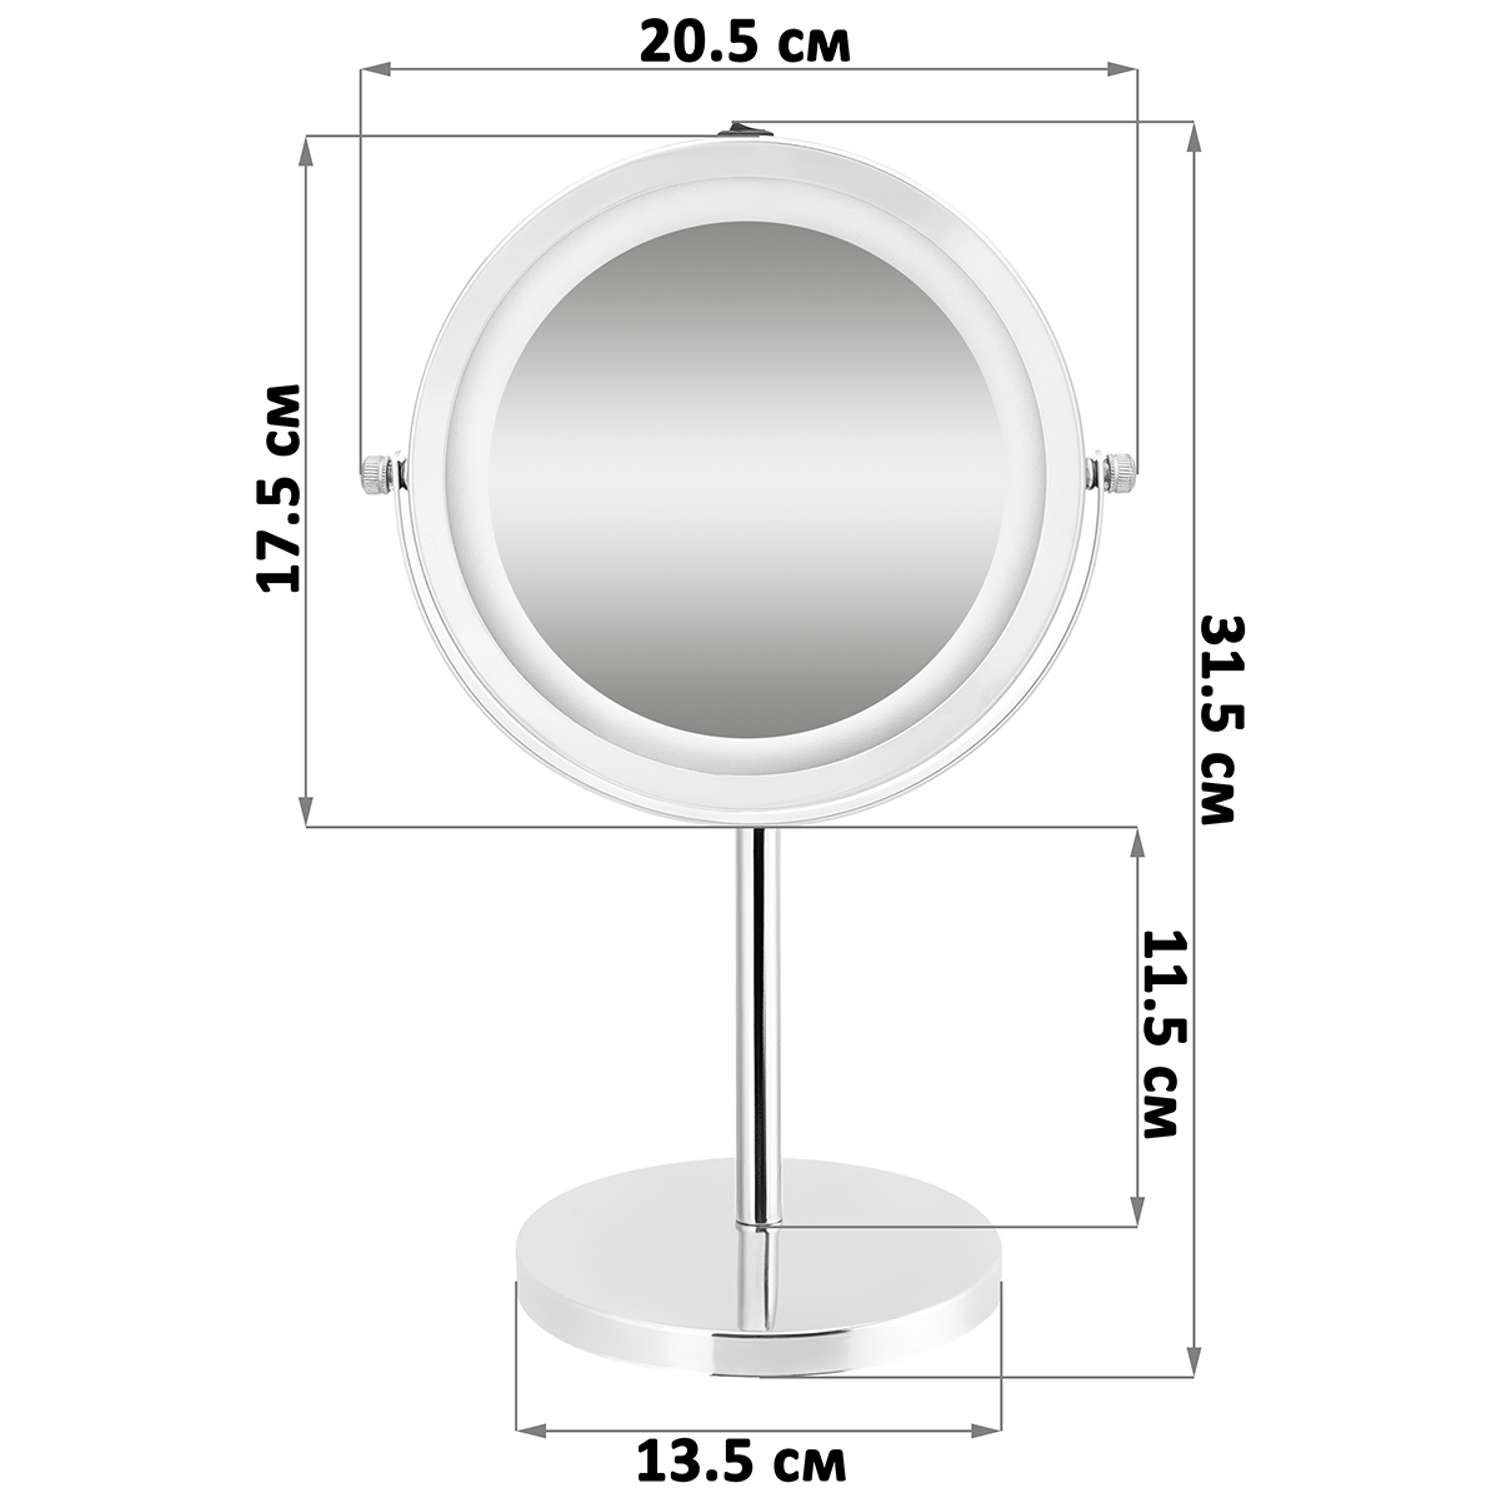 Зеркало El Casa двустороннее на подставке 20.5х13.5х31.5 см Хром со светодиодной подсветкой - фото 2